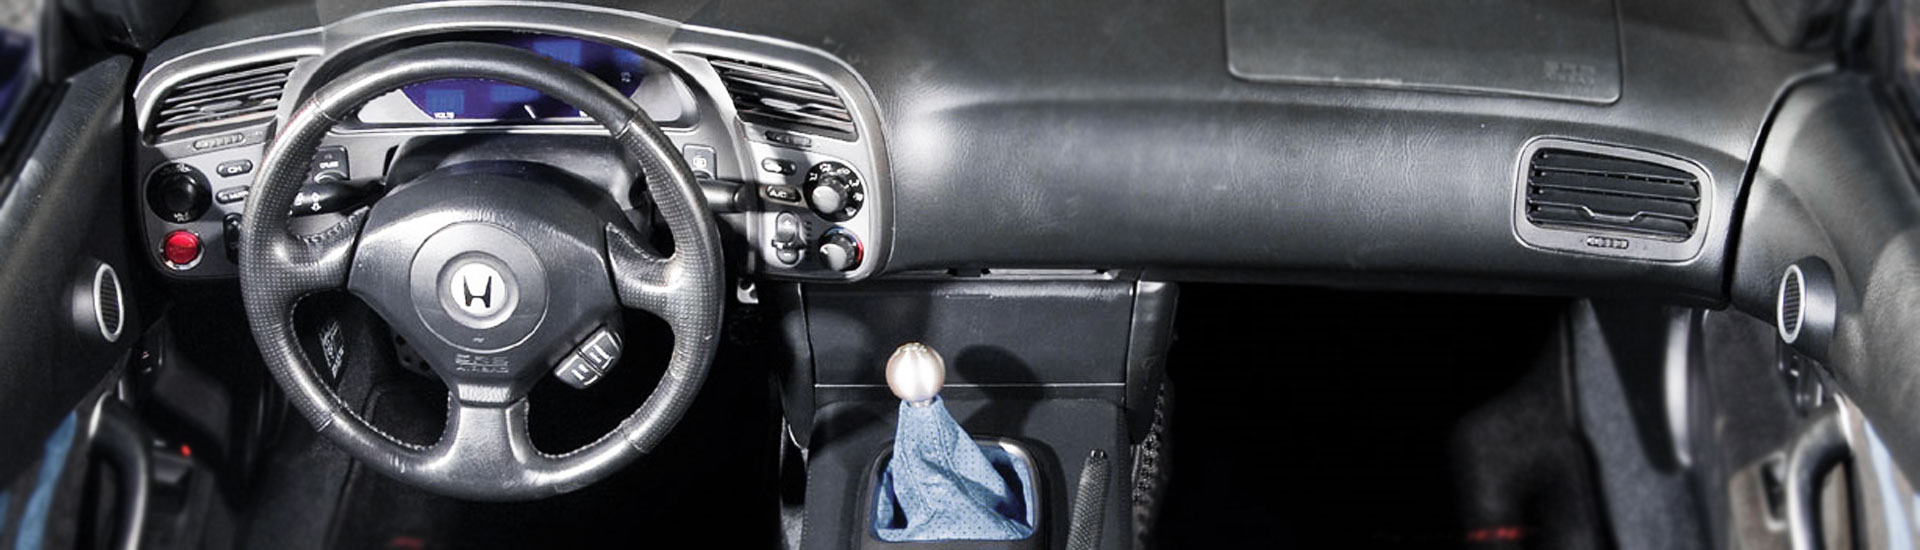 Rdash Dash Kit for Honda S2000 2000-2009 Auto Interior Decal Trim